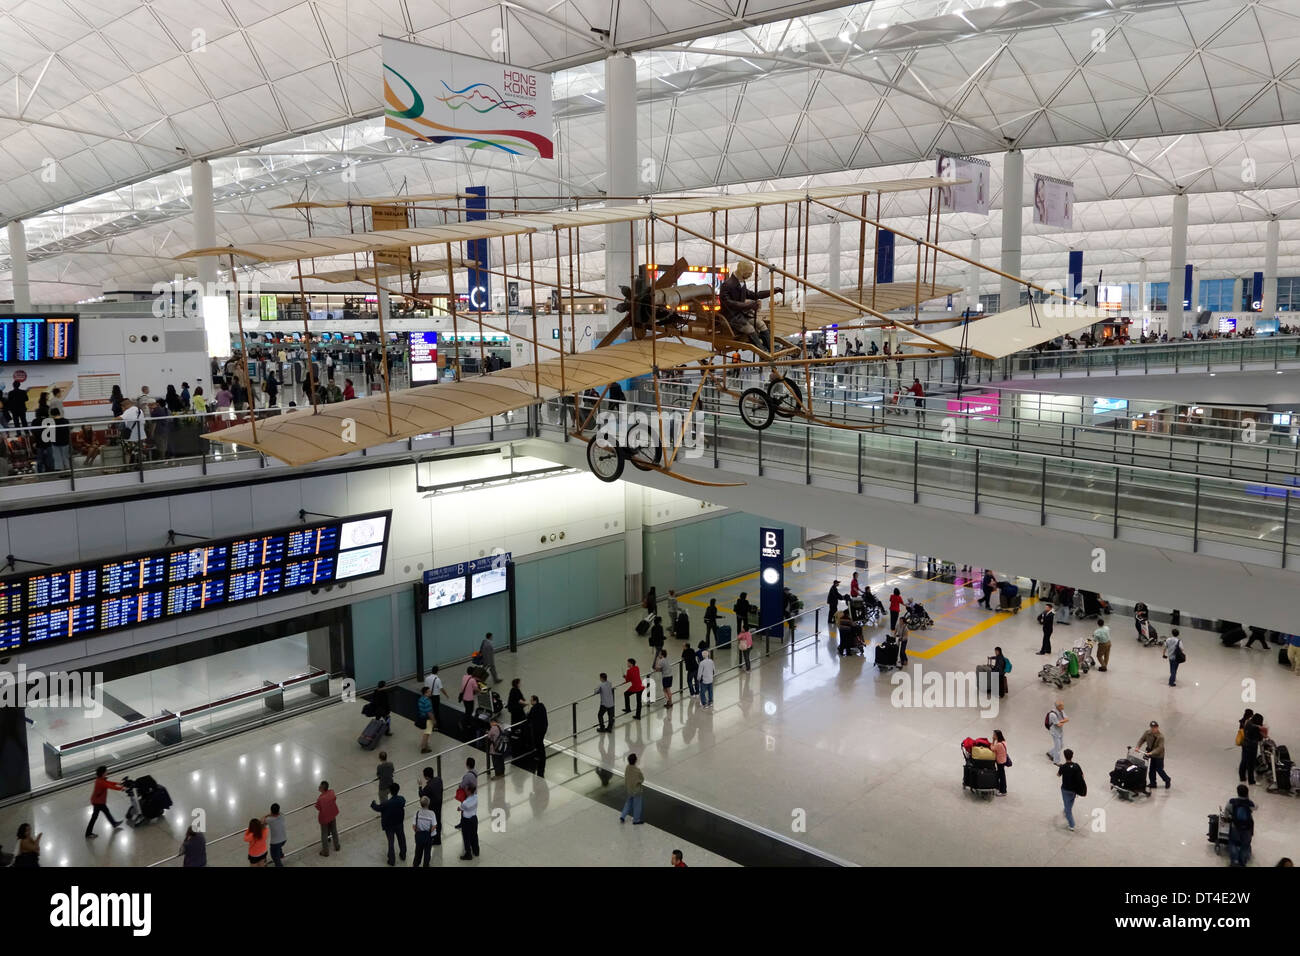 Replica airplane hanging in the passenger terminal of Hong Kong International Airport, China. Stock Photo